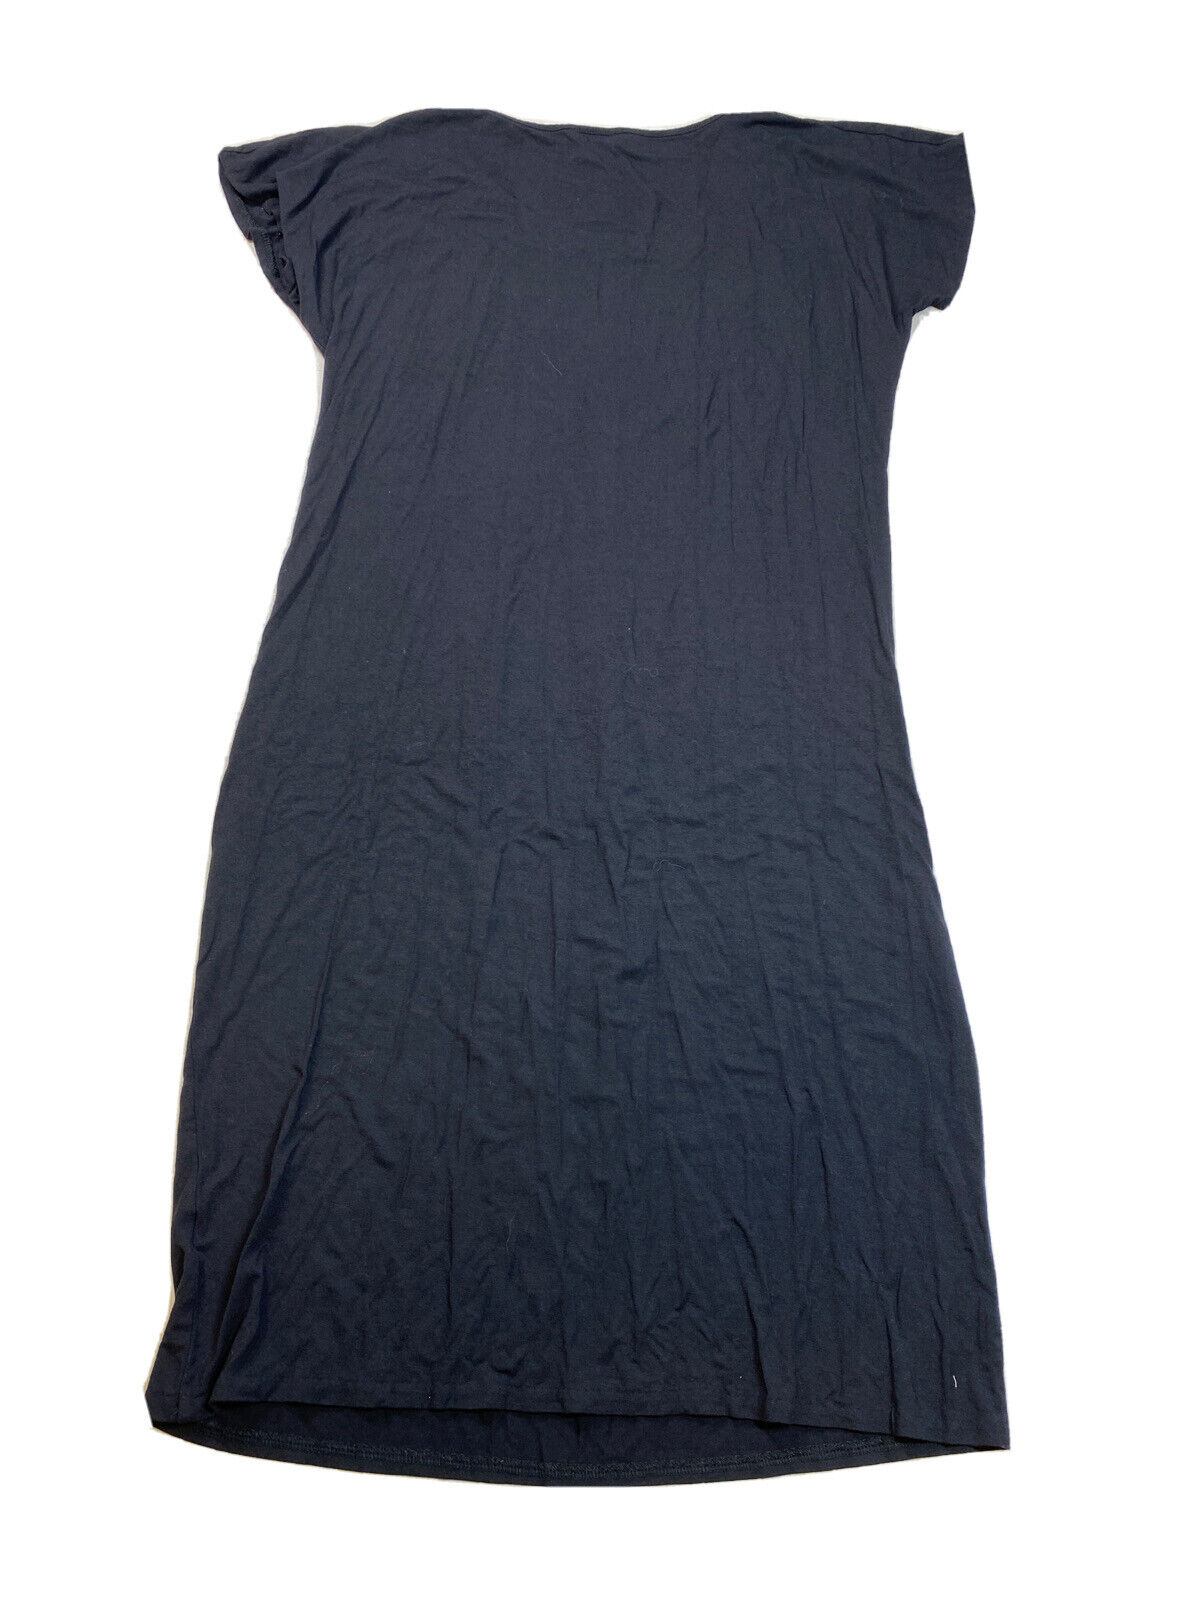 Talbots Women's Black Short Sleeve Pleated T-Shirt Dress - M Petite